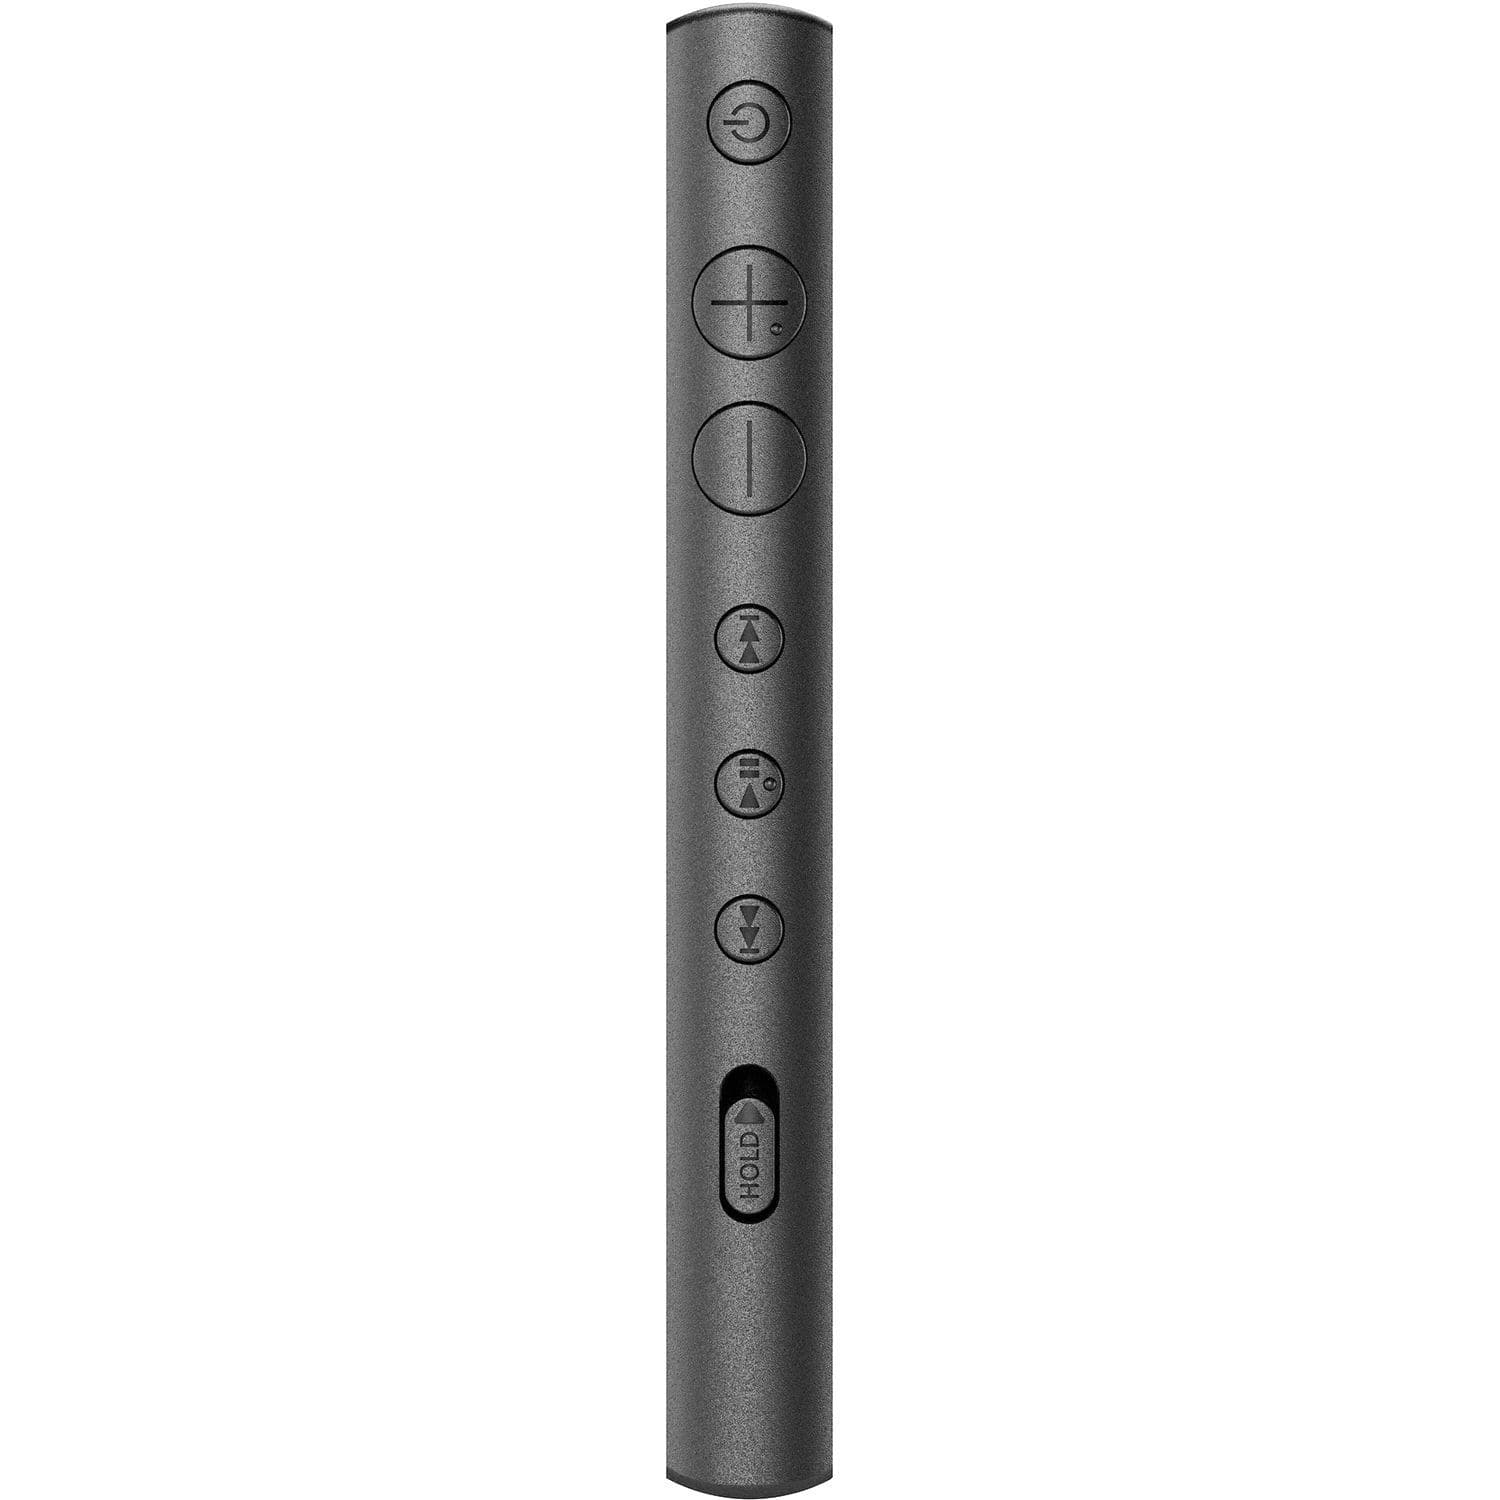 Sony Walkman NW-A105 - Digital player - Android 9.0 (Pie) - 16 GB